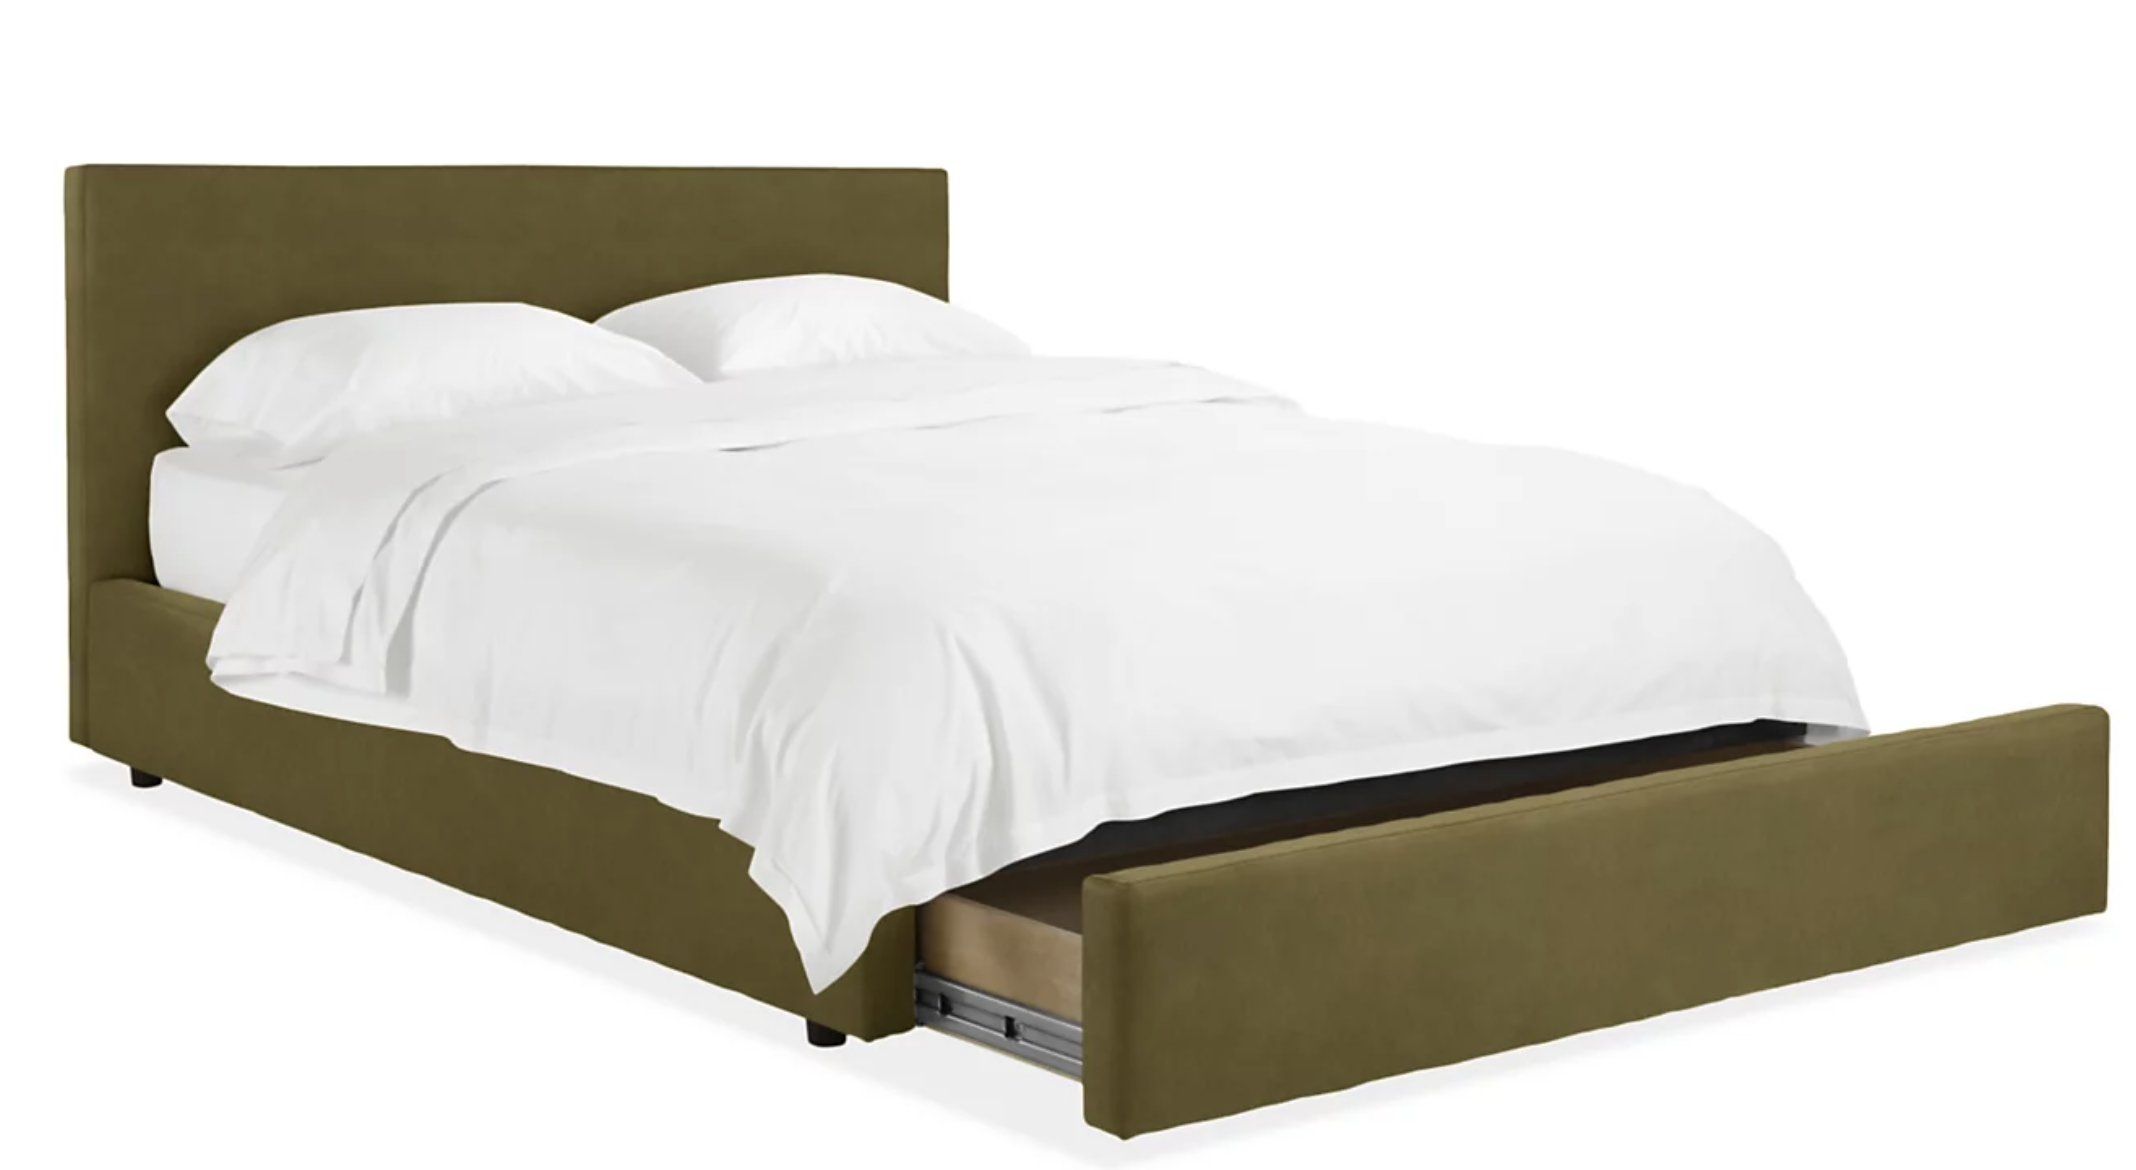 Wyatt Bed with Storage Drawer- Banks fir- 36'' - Image 0